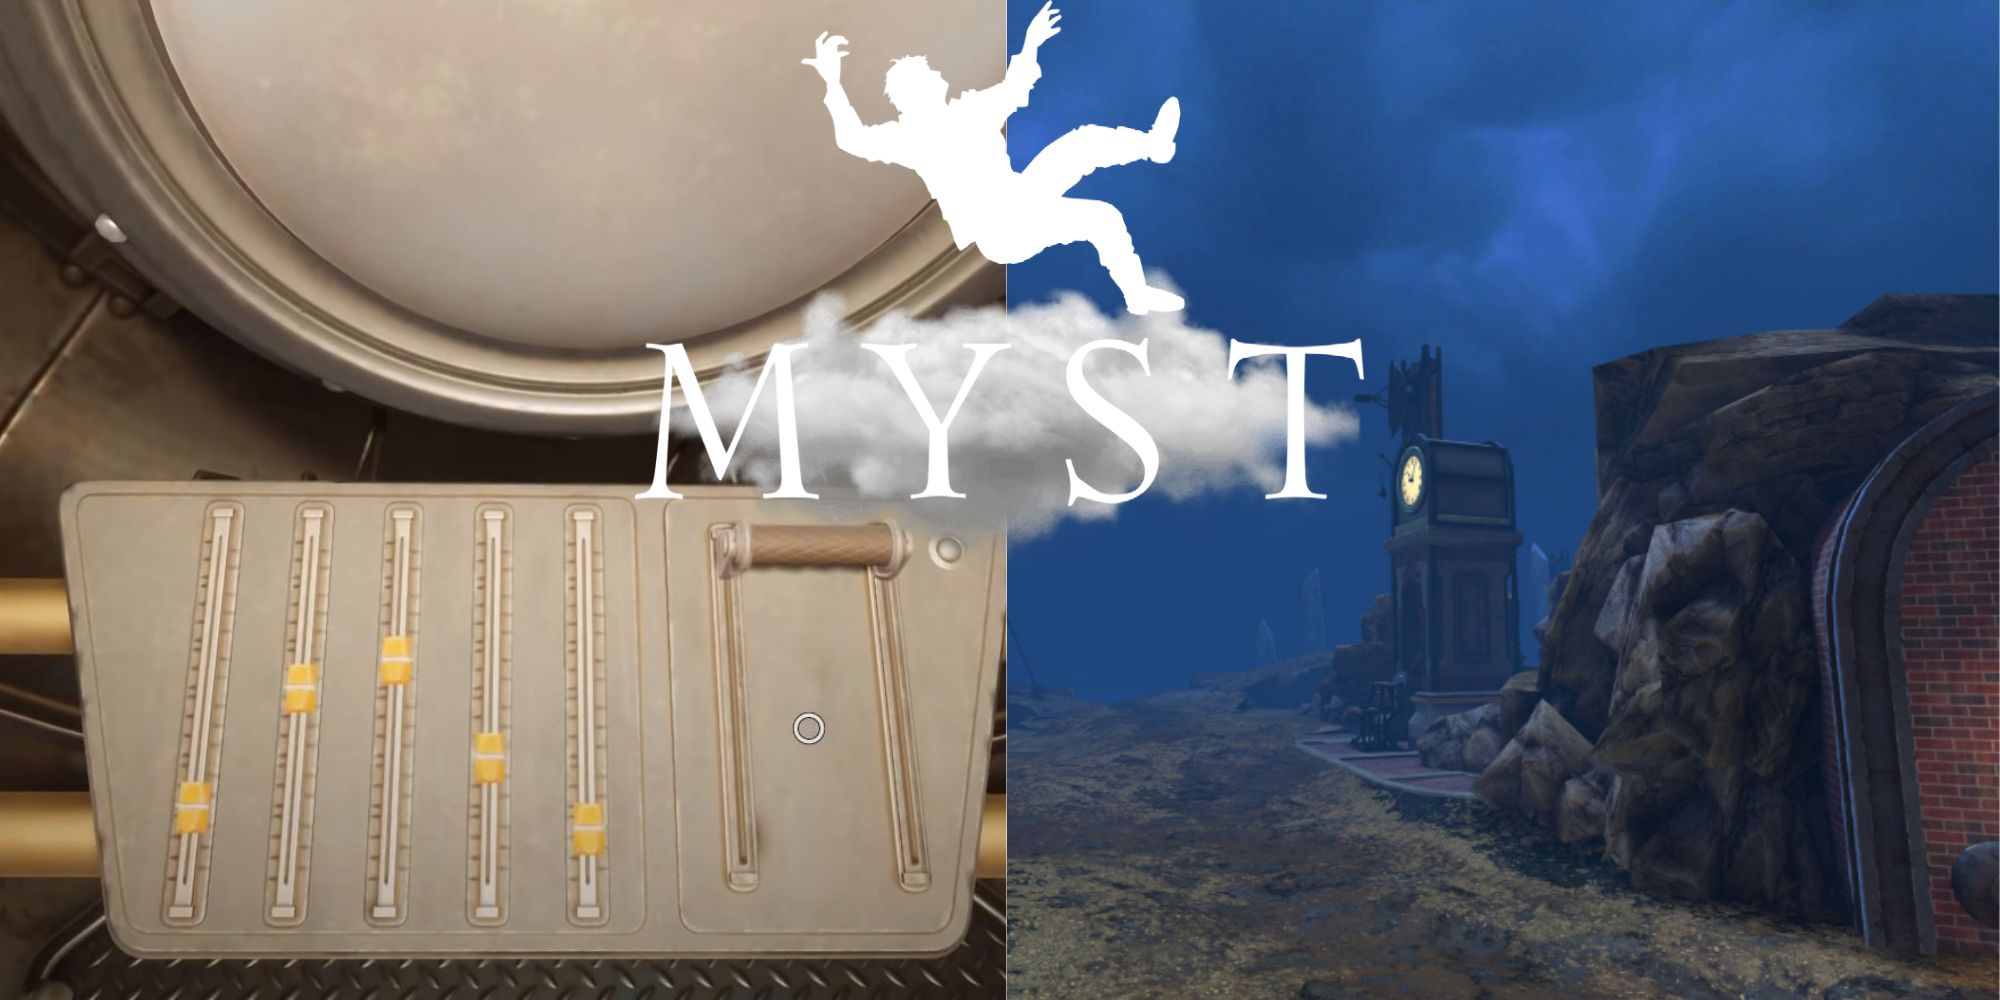 myst 2021 patch